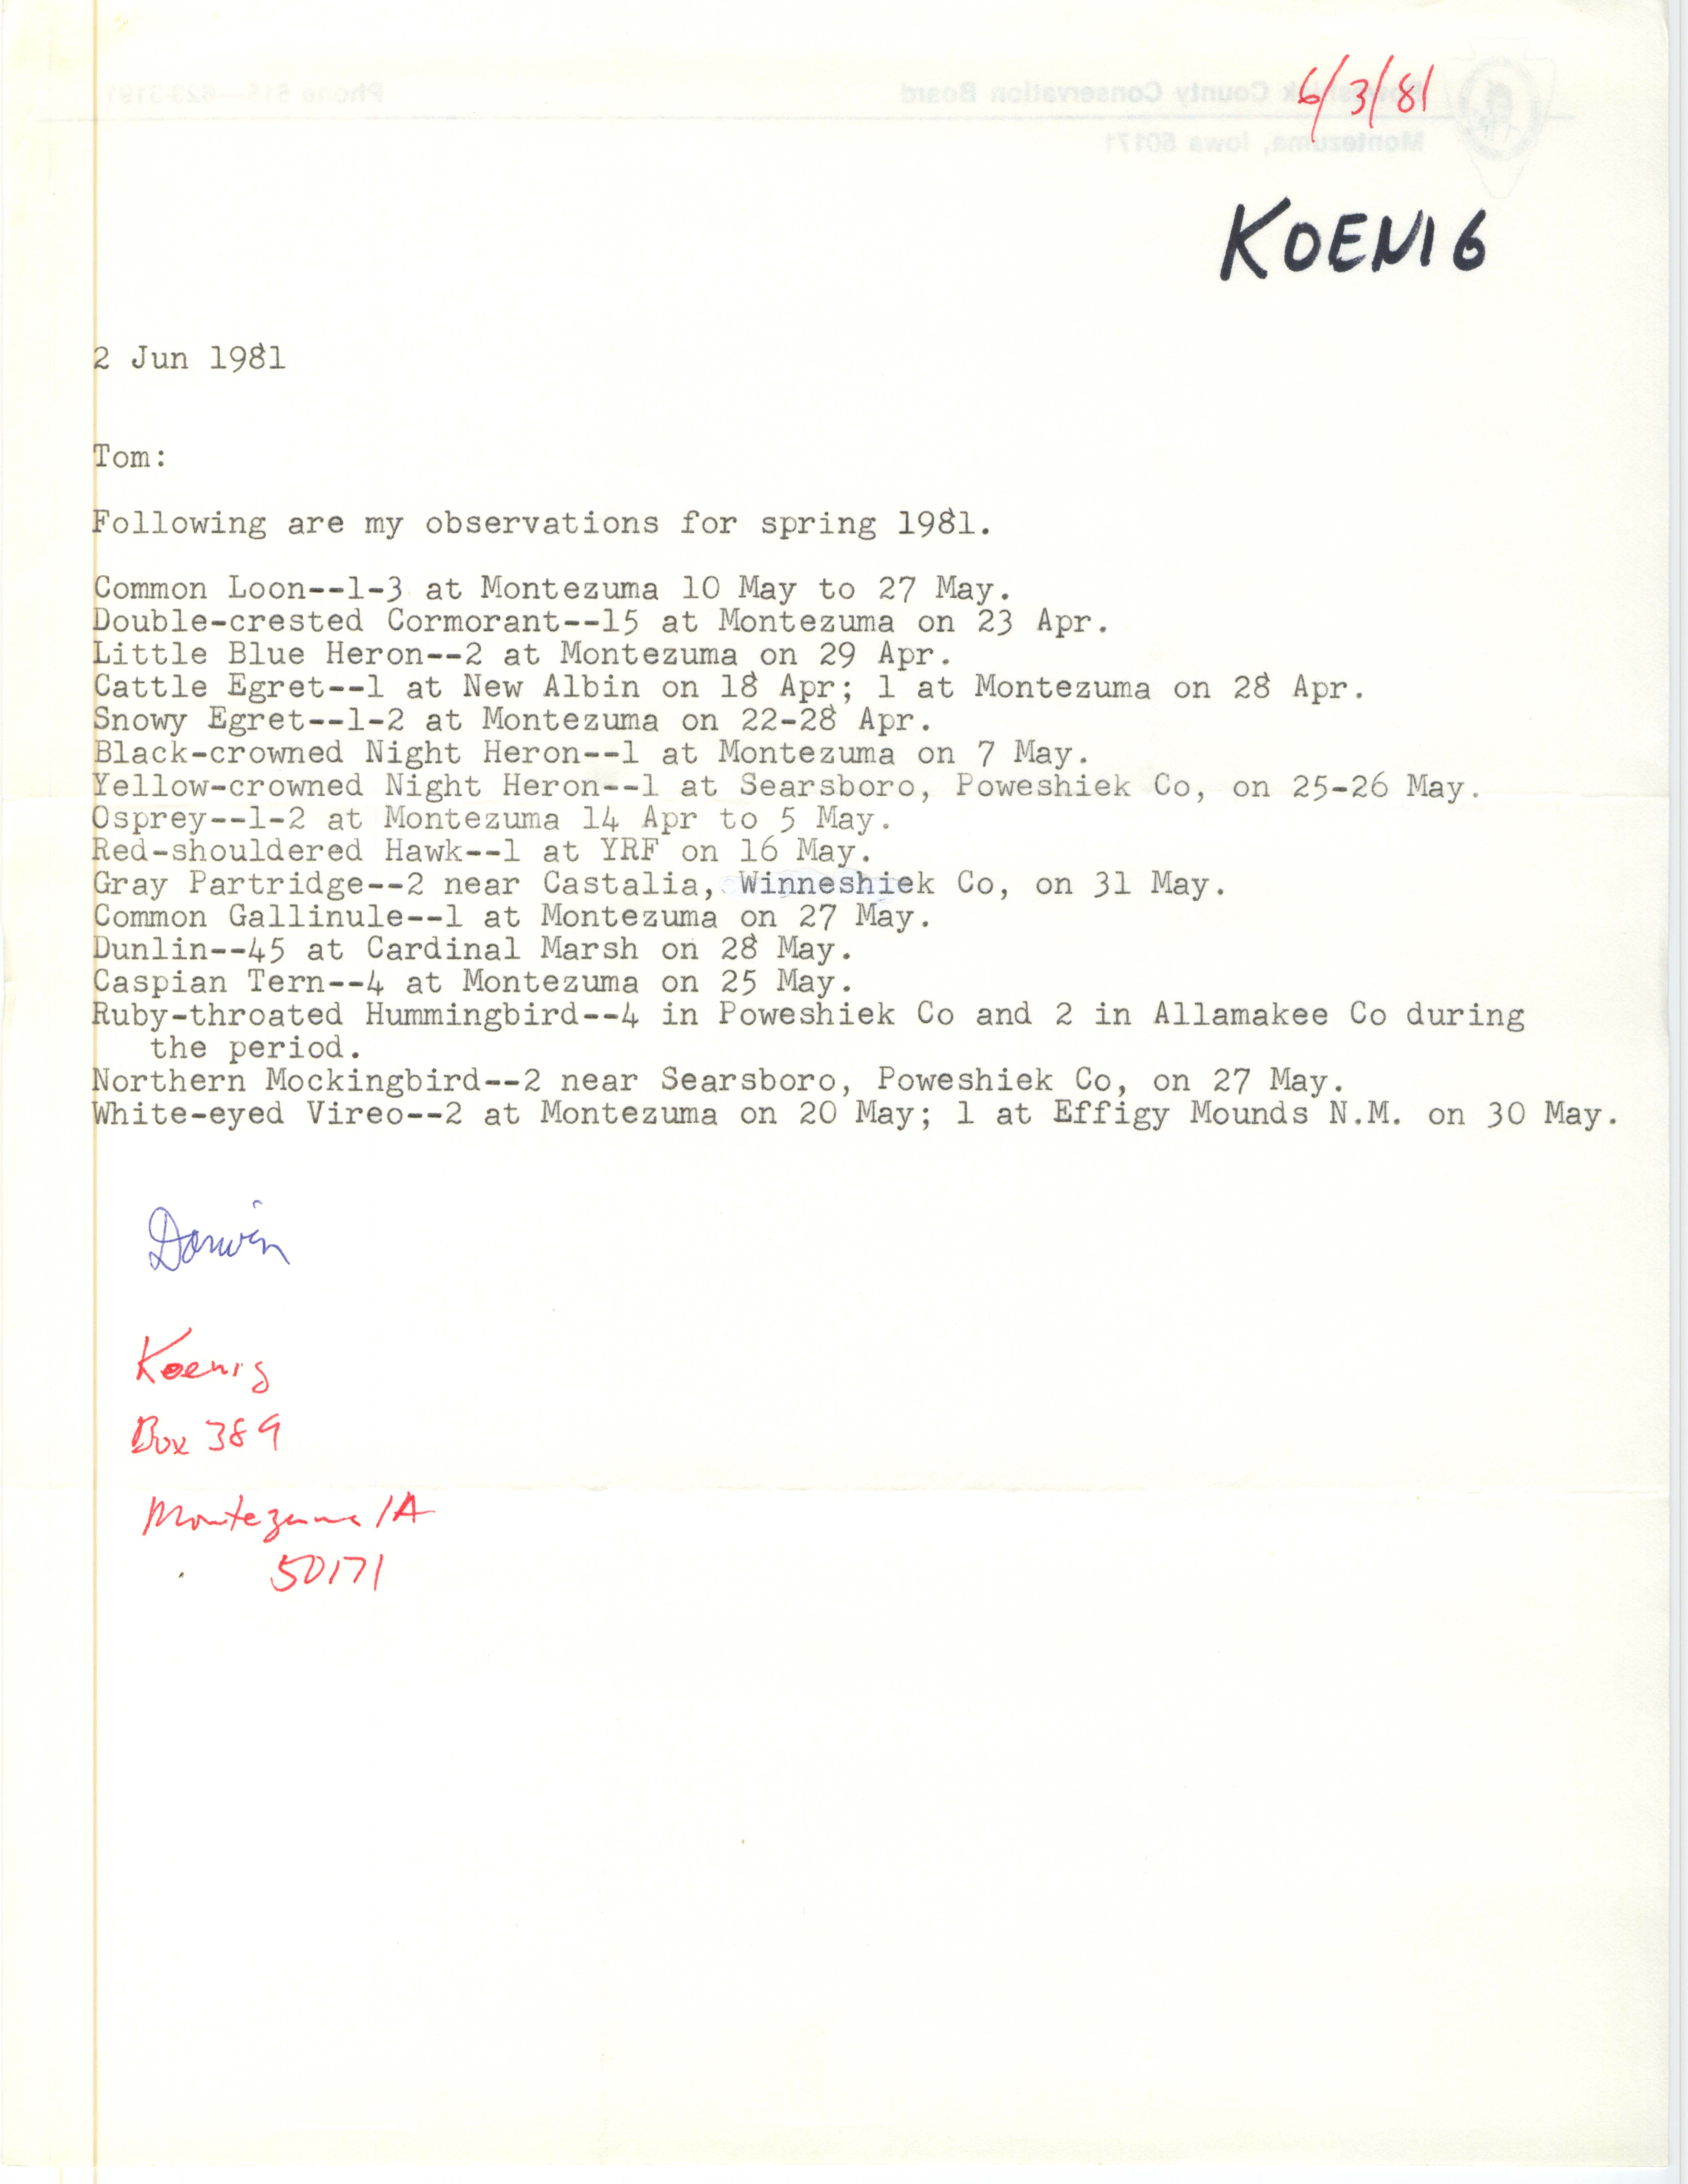 Darwin Koenig letter to Thomas Kent regarding observations for spring, June 2, 1981